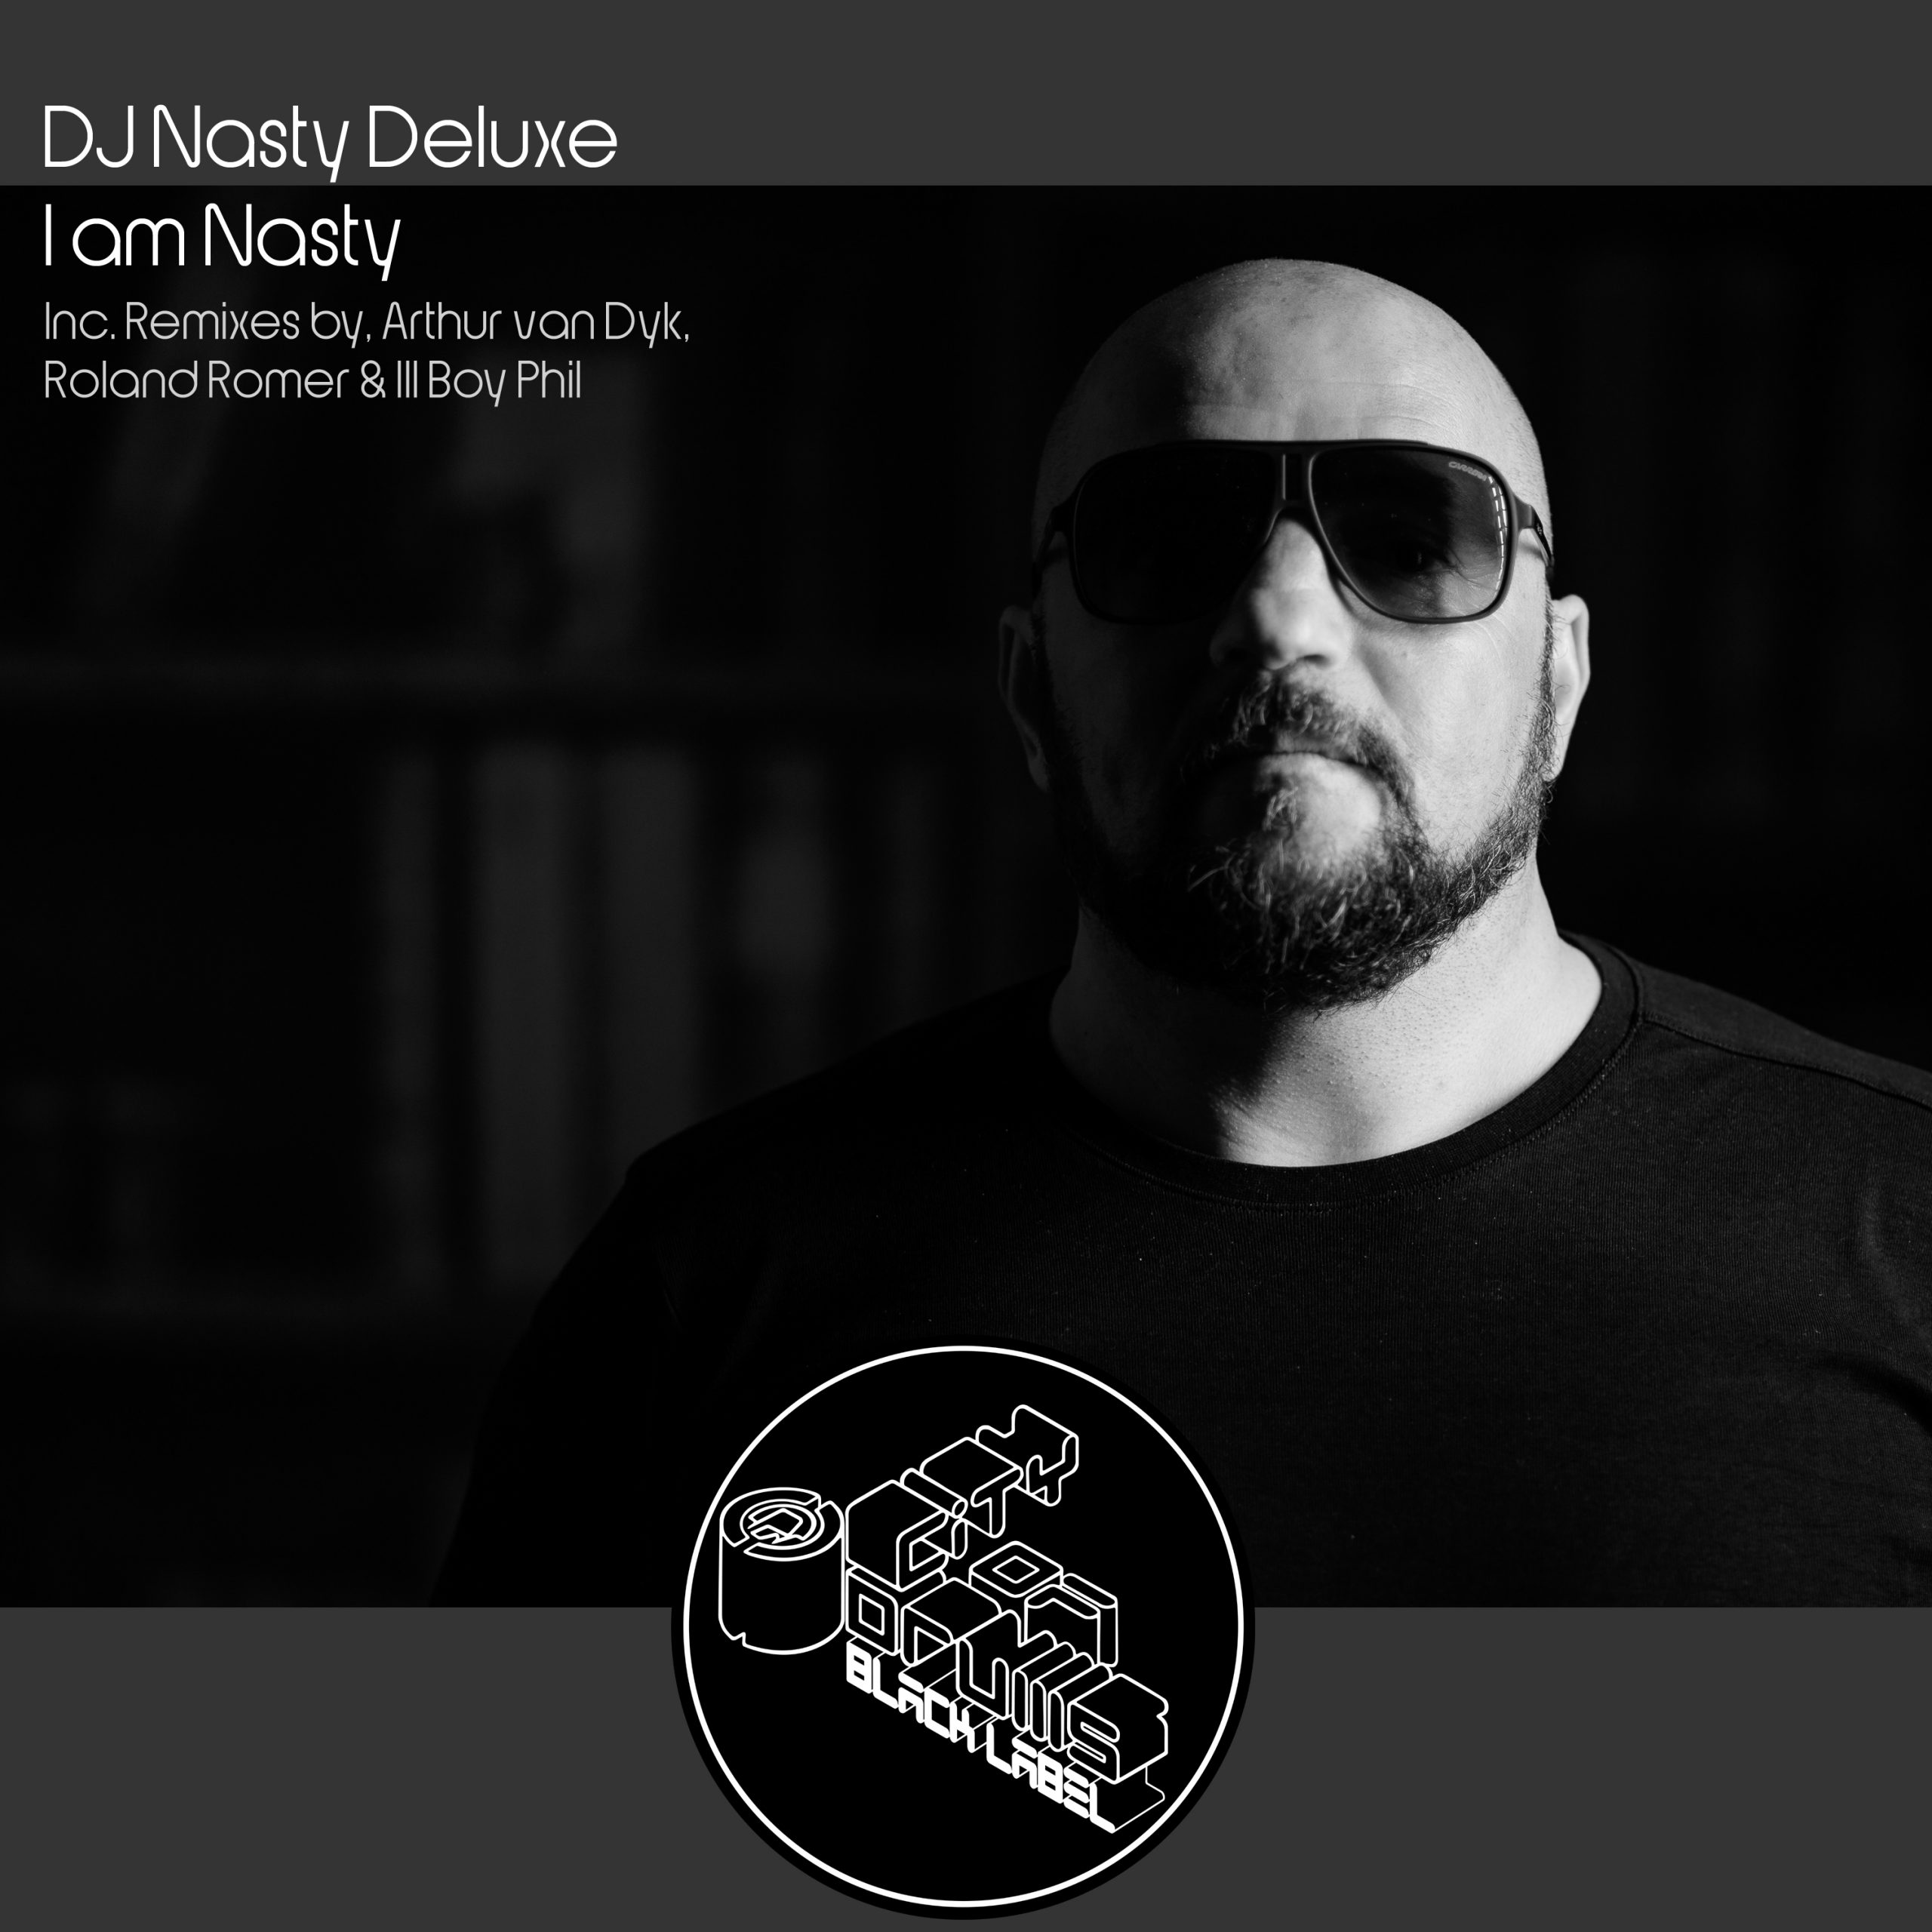 OUT NOW!!! I am Nasty von DJ Nasty Deluxe! 1